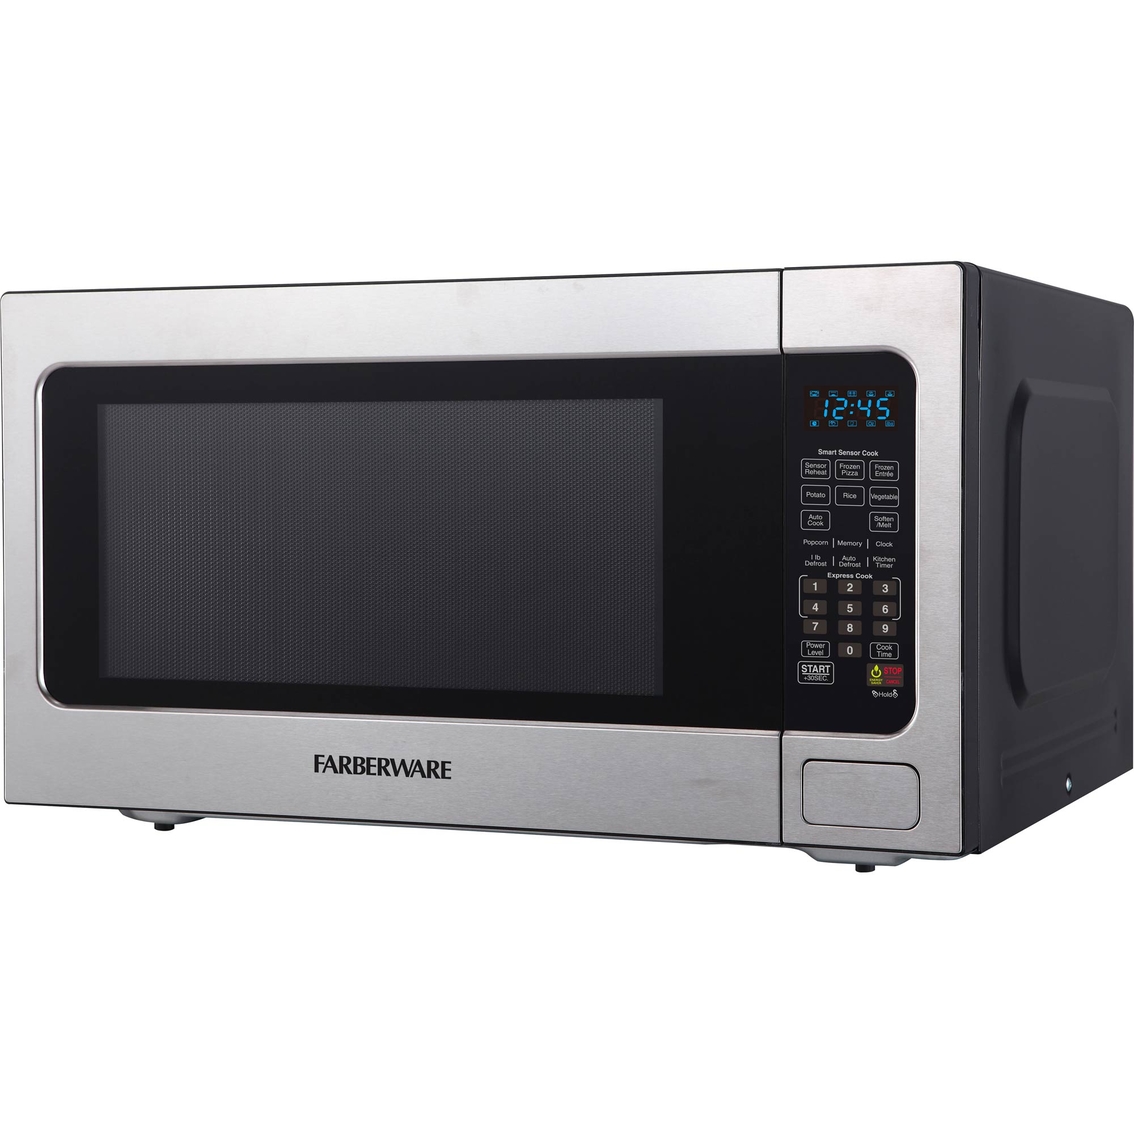 Farberware 2.2 cu. ft. 1200 Watt Microwave Oven - Image 2 of 8